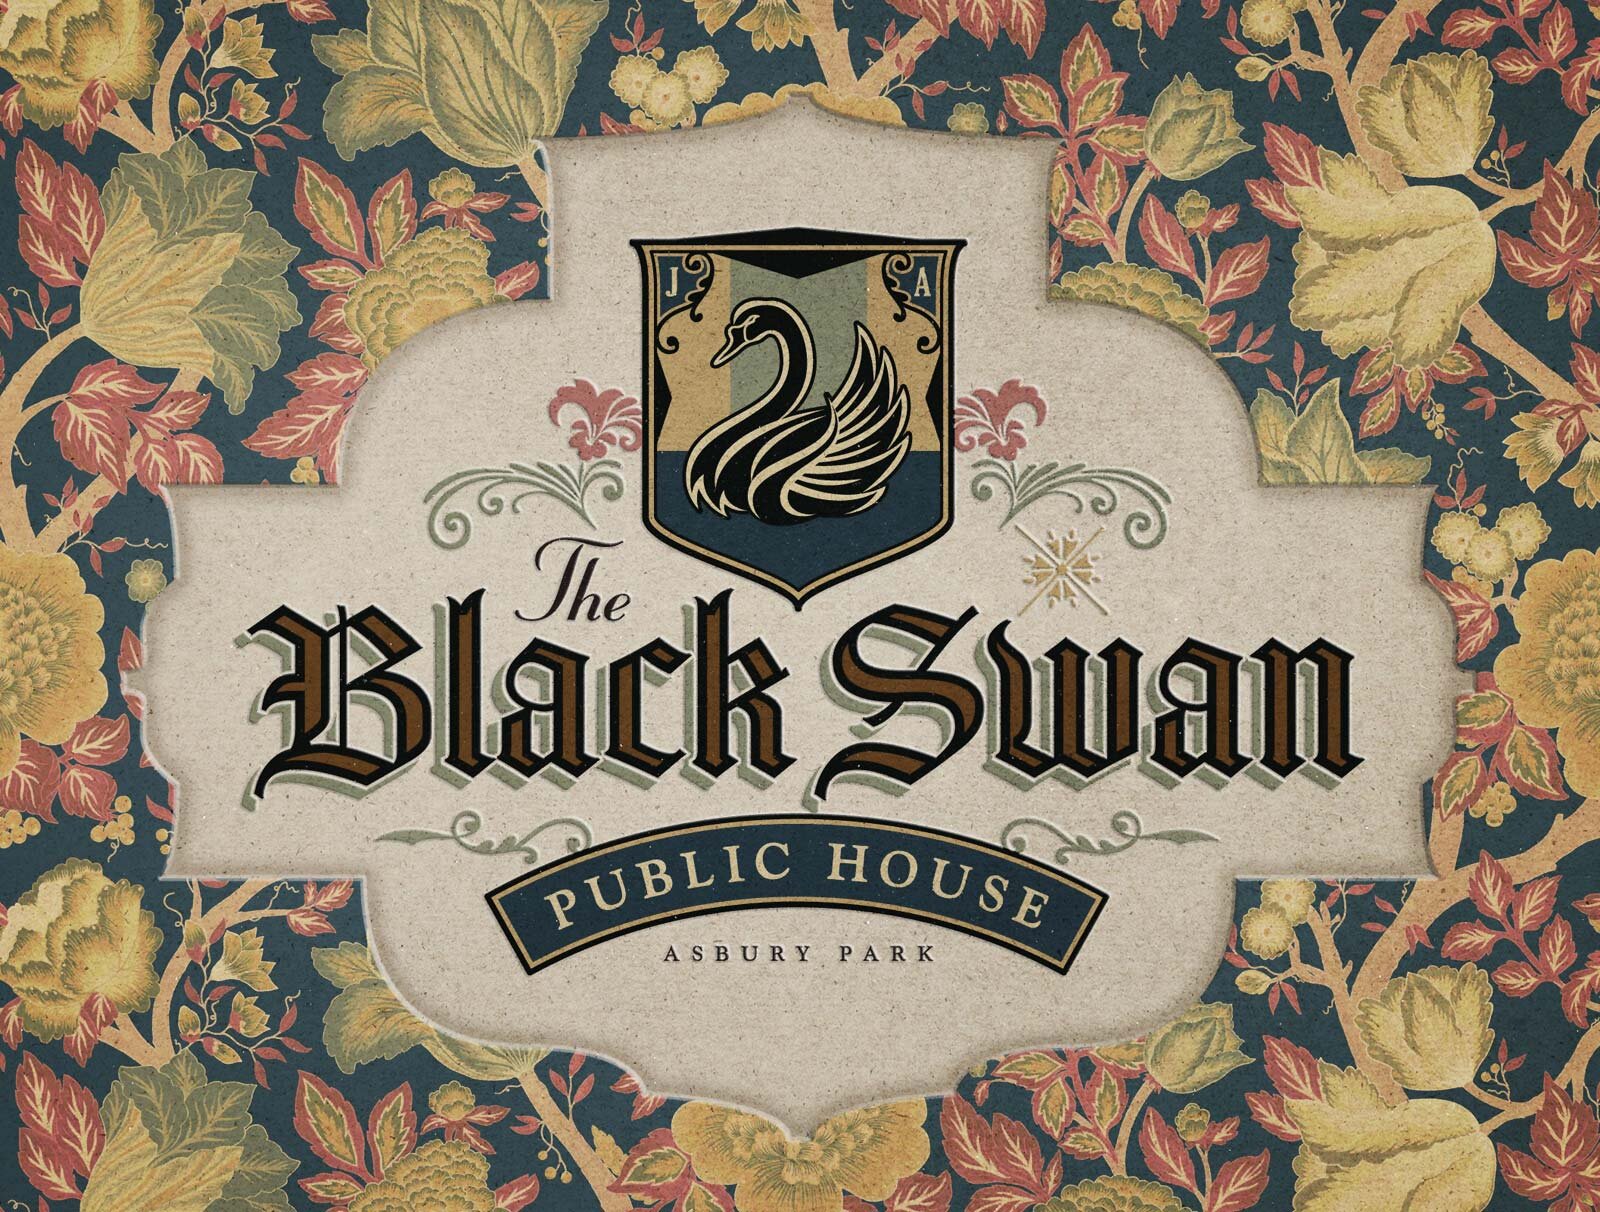 The Black Swan House